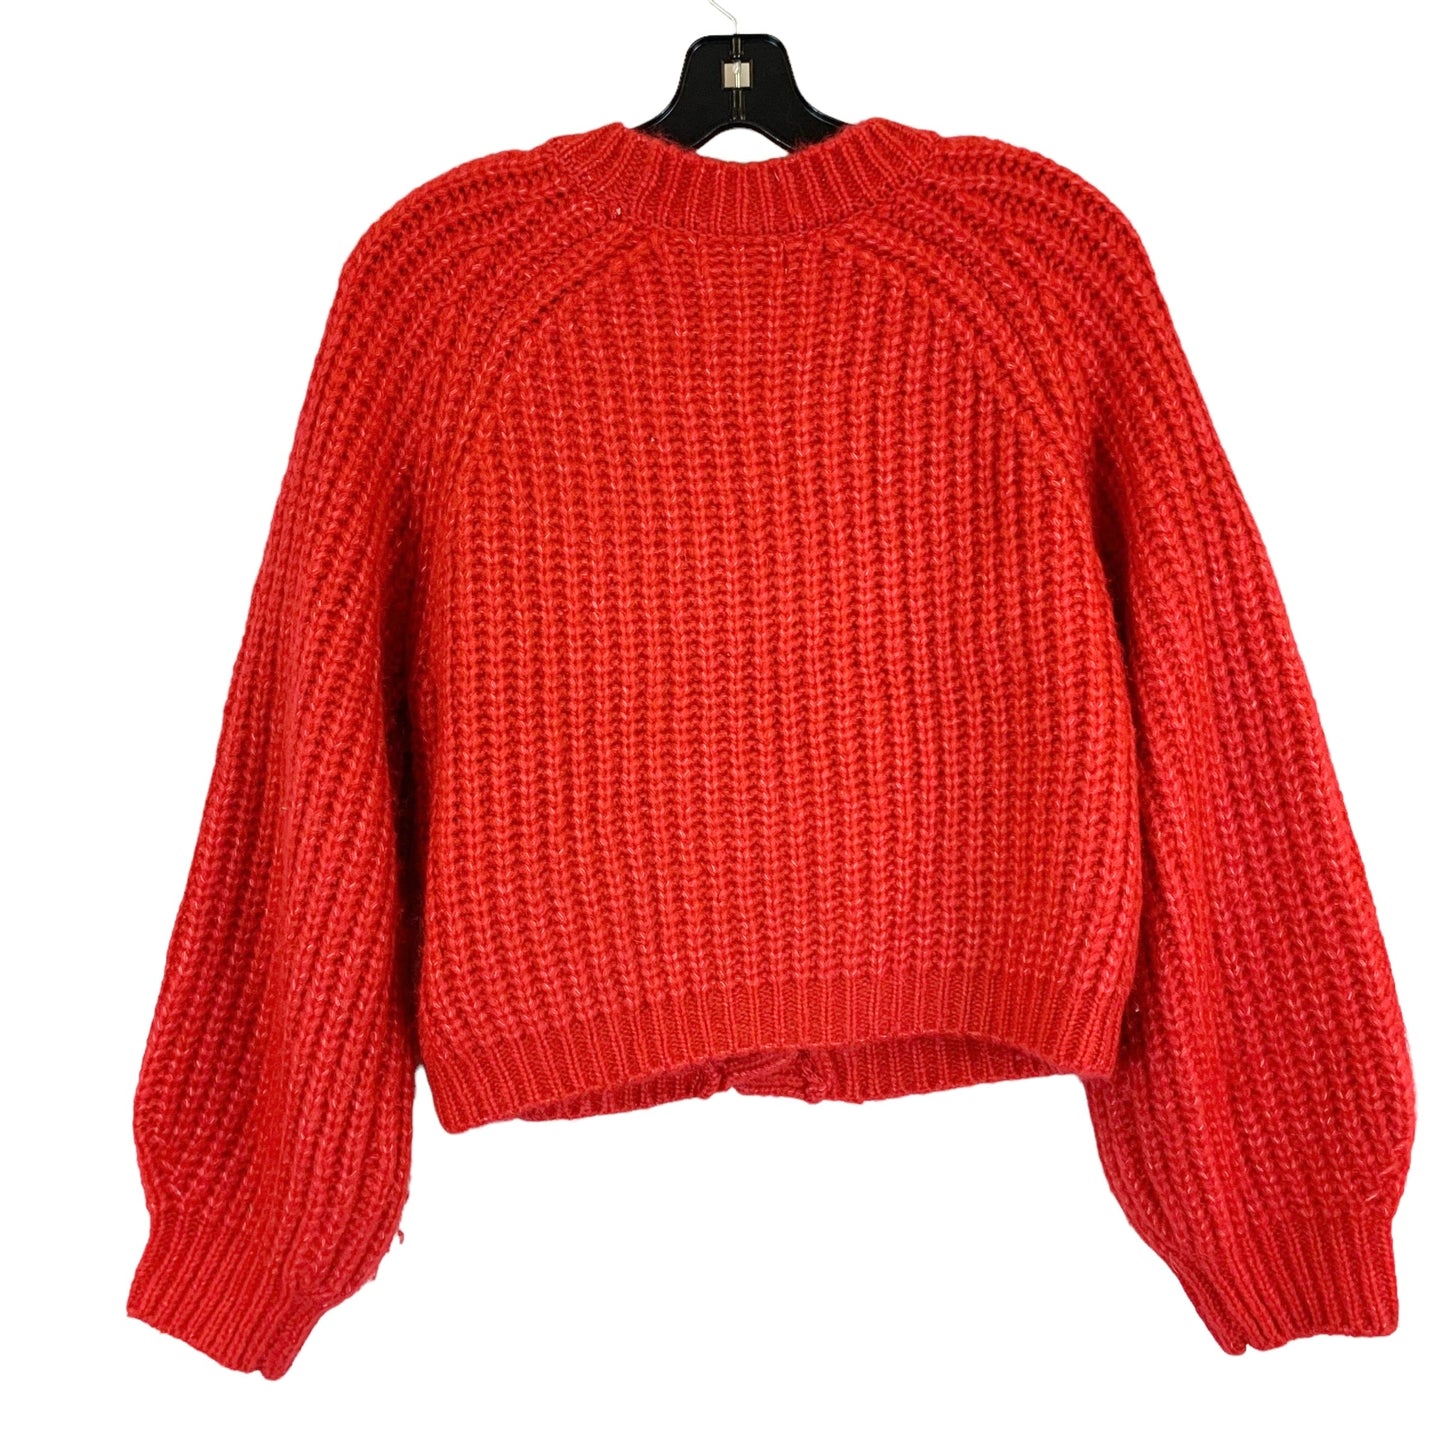 Sweater Cardigan By Jessica Simpson  Size: M